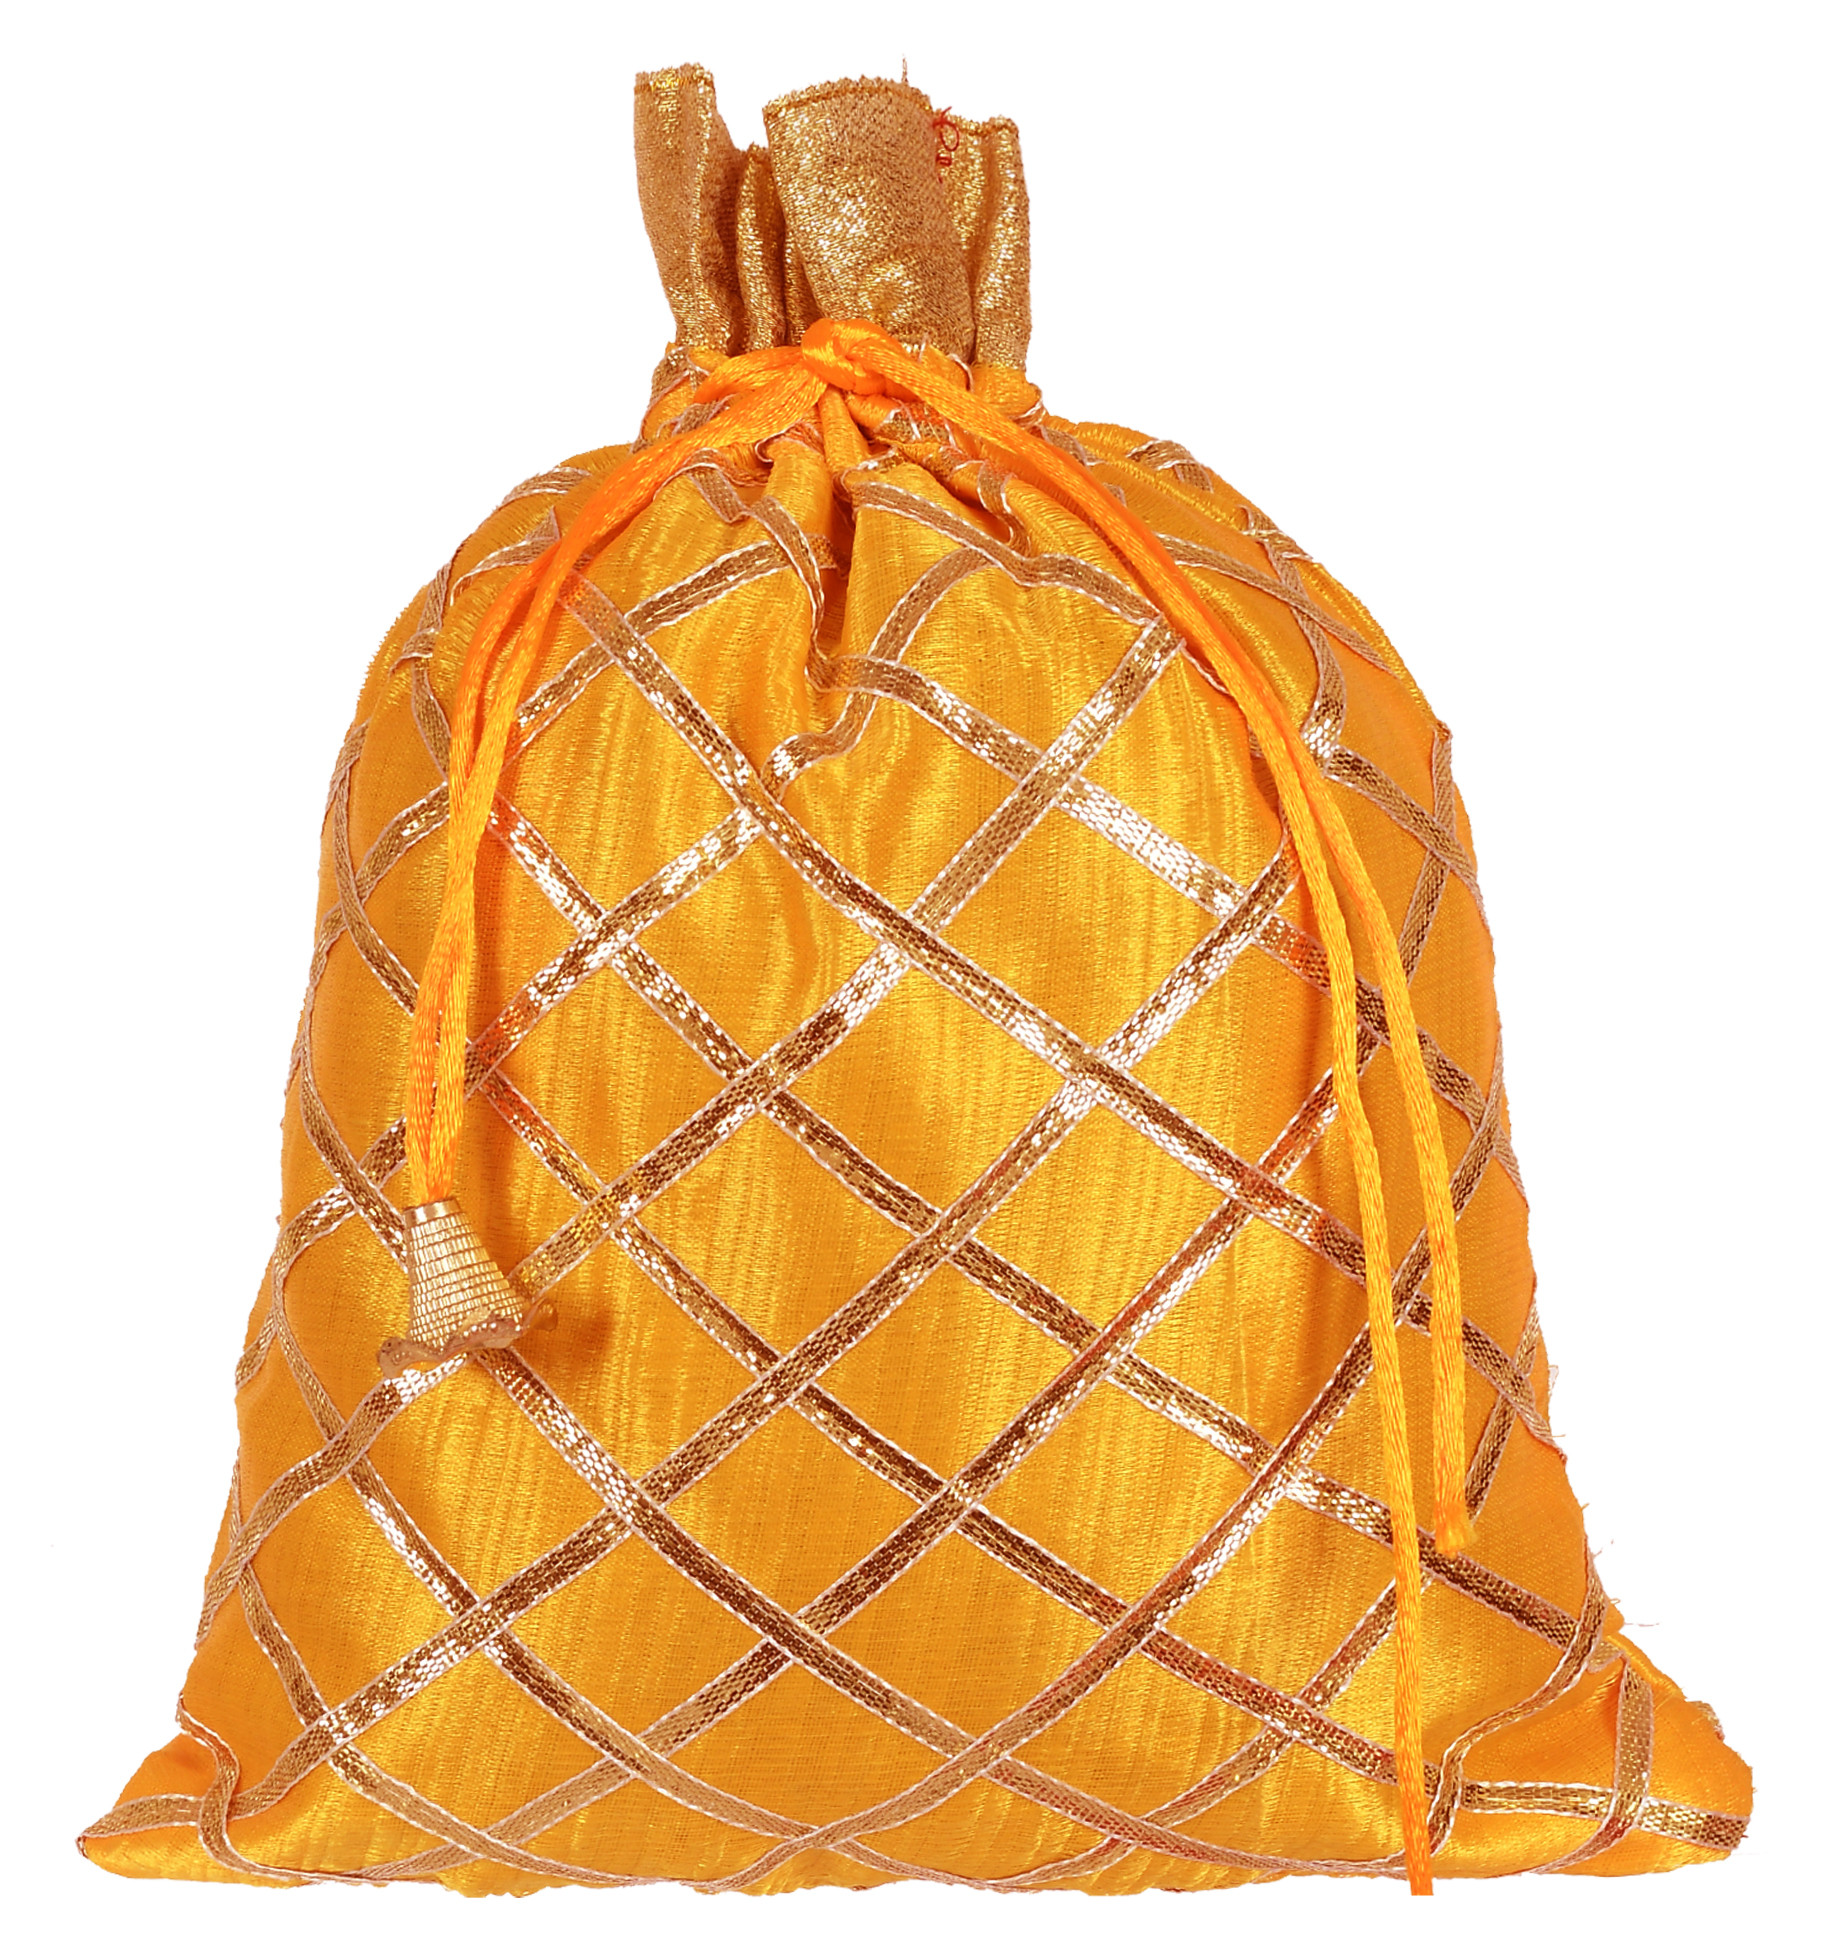 Kuber Industries Drawstring Potli Bag Party Wedding Favor Gift Jewelry Bags-(Yellow)